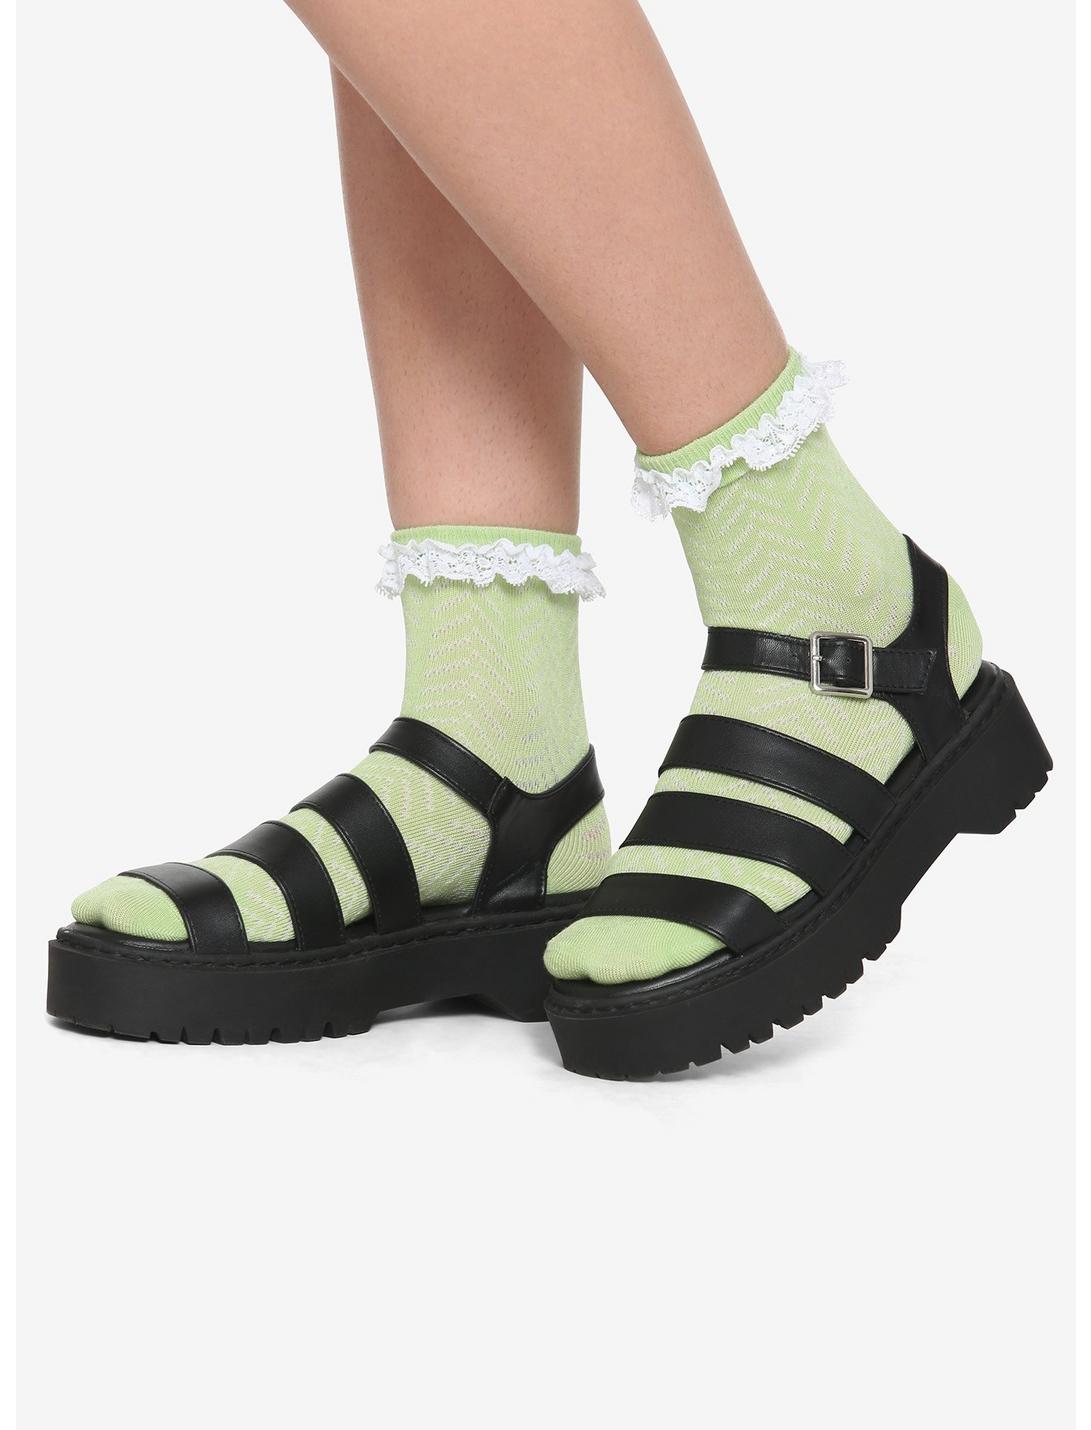 Mint Green Ruffle Ankle Socks, , hi-res